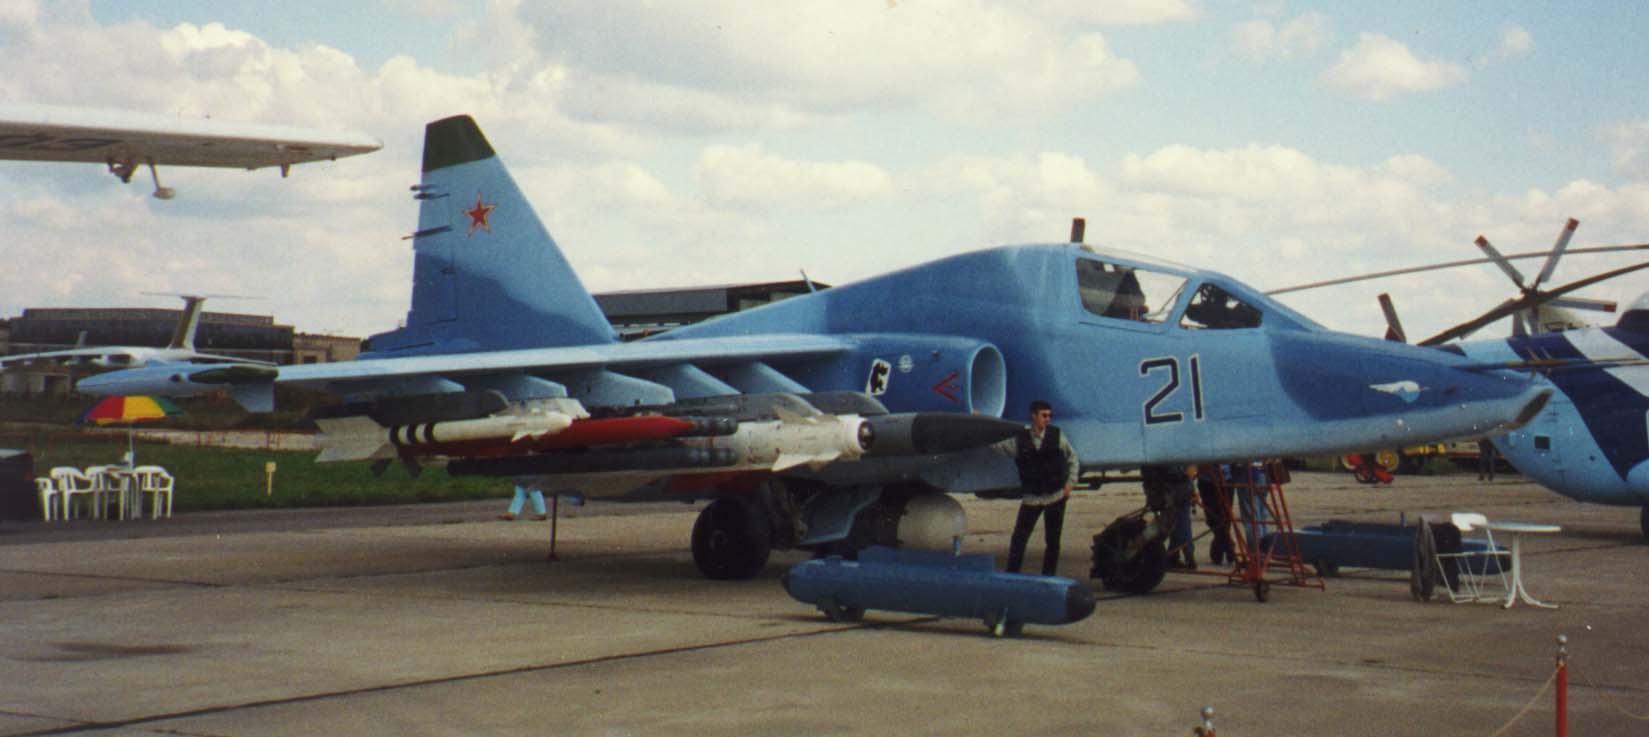 https://upload.wikimedia.org/wikipedia/commons/6/6d/Su-25TM.jpg